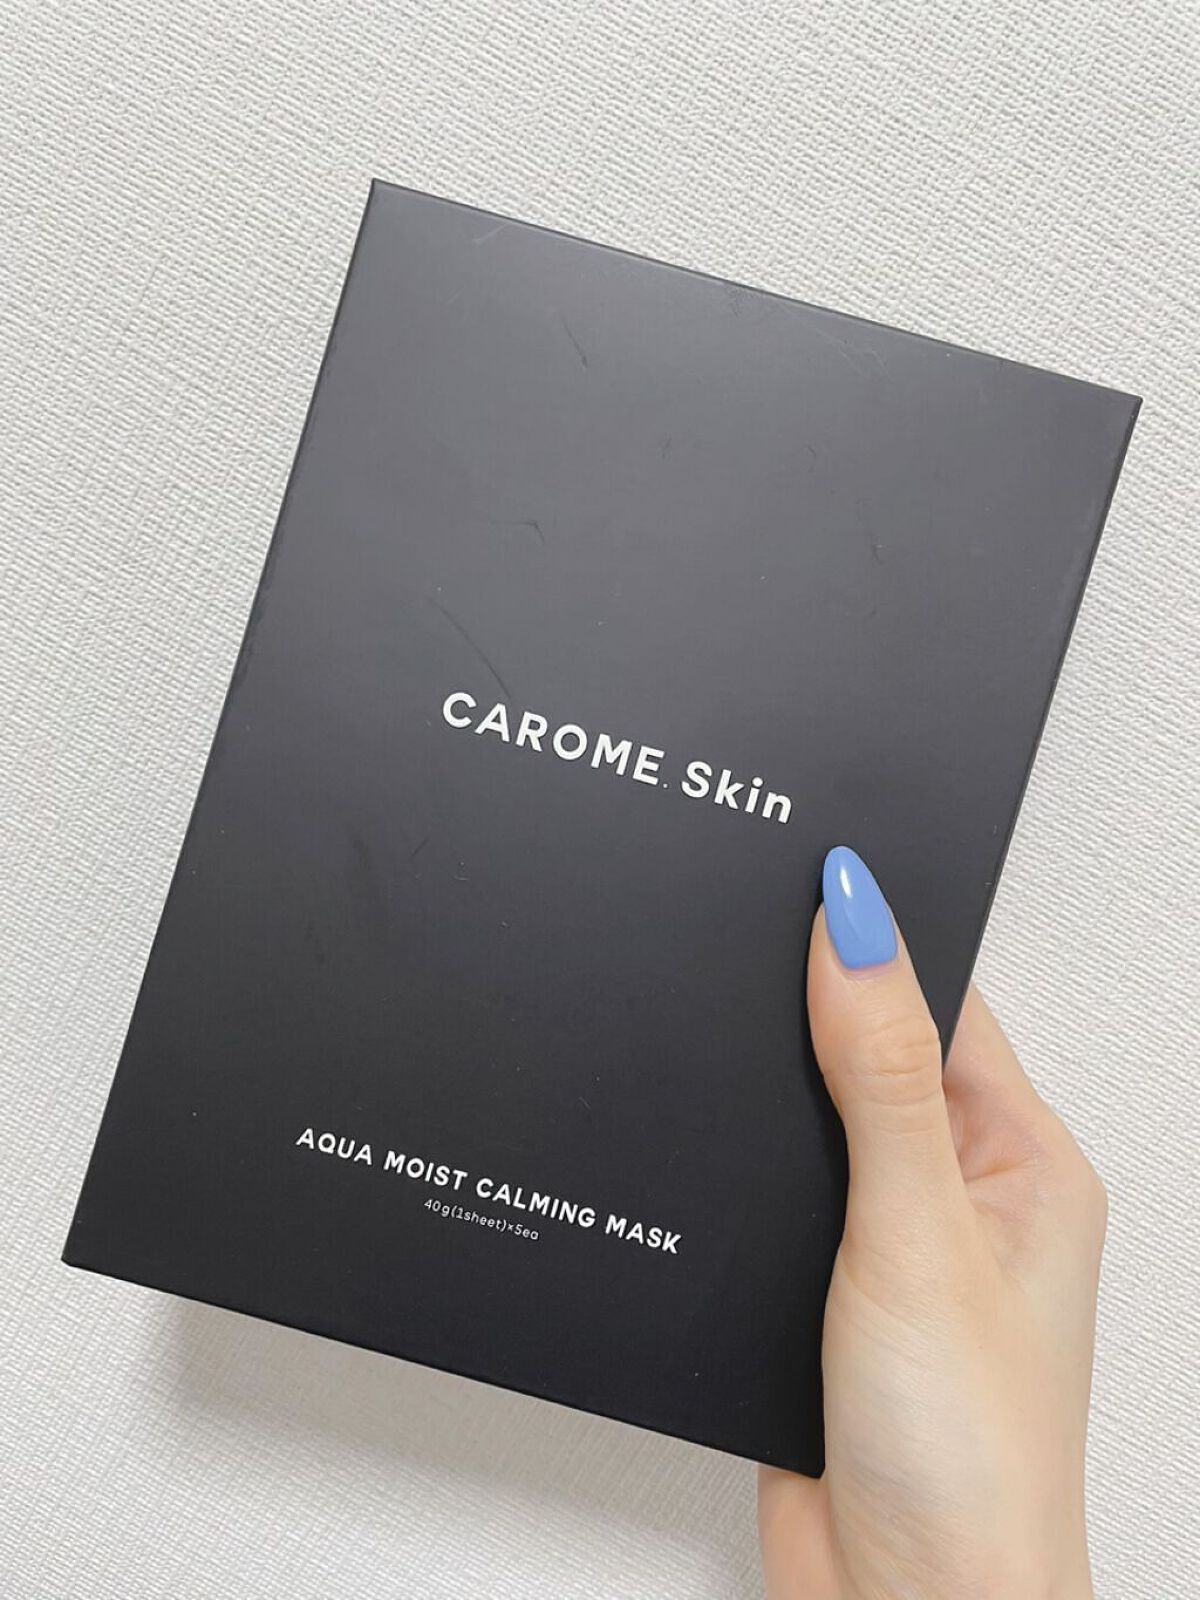 CAROME. Skin(カロミースキン) | 定番から新作まで人気おすすめ商品のクチコミをチェック | LIPS